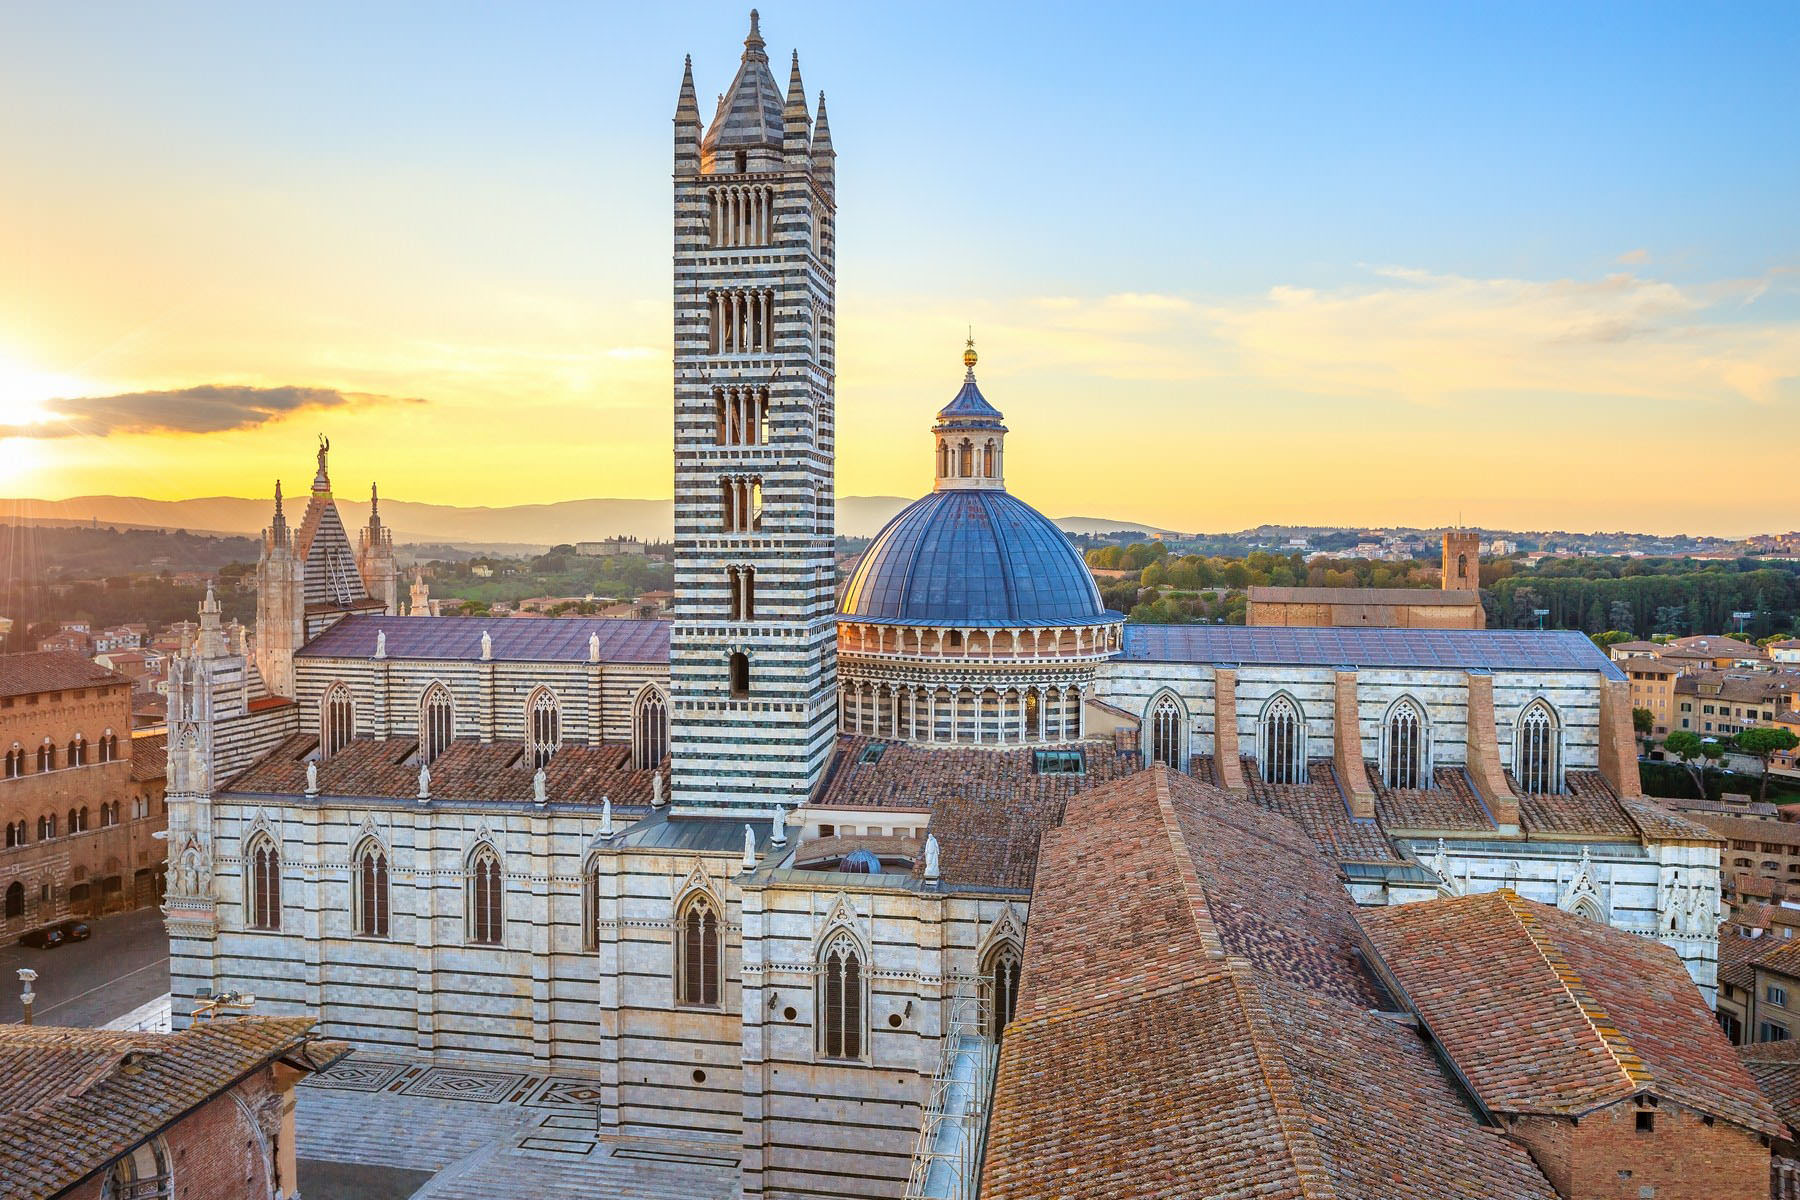 Siena aerial sunset panoramic view. Cathedral Duomo landmark. Tuscany, Italy.